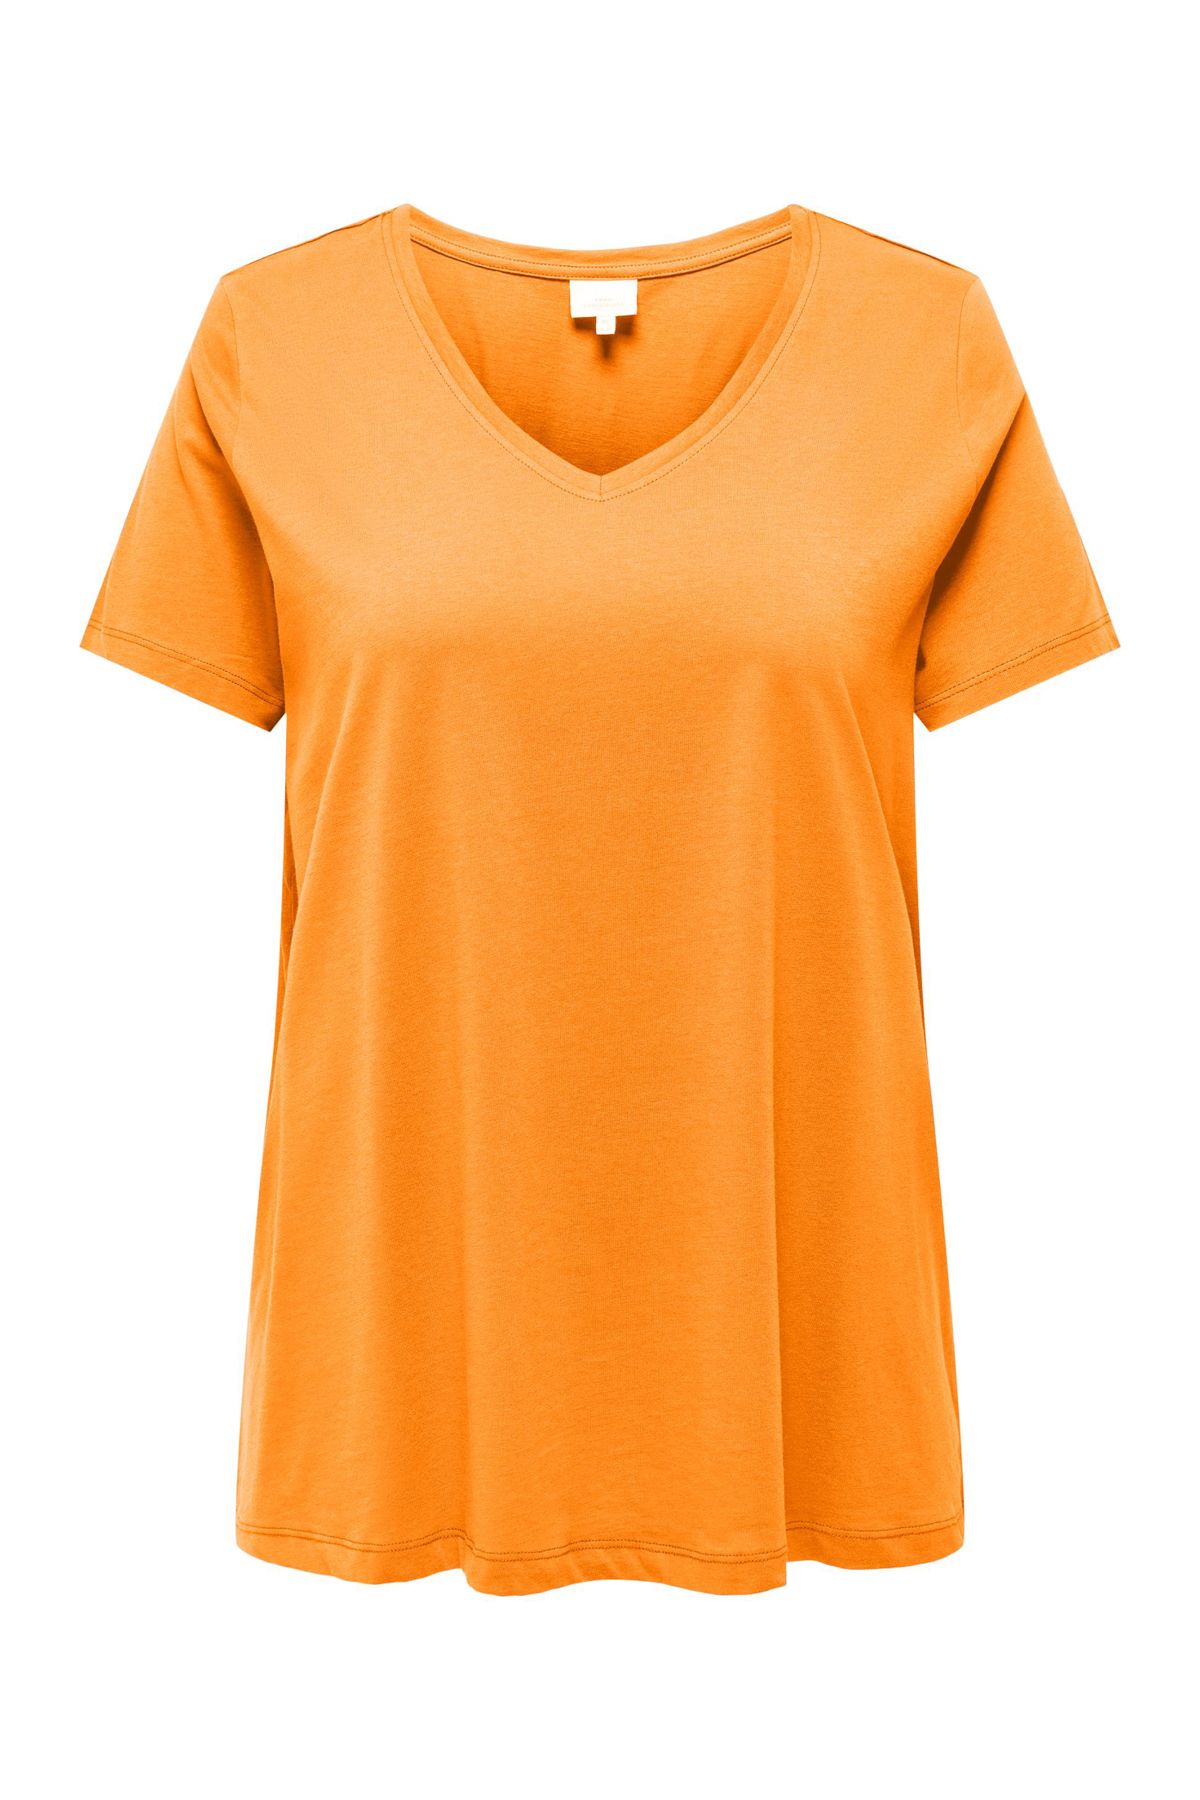 Only - Carmakoma - T-Shirt - Orange fit Trendyol Regular